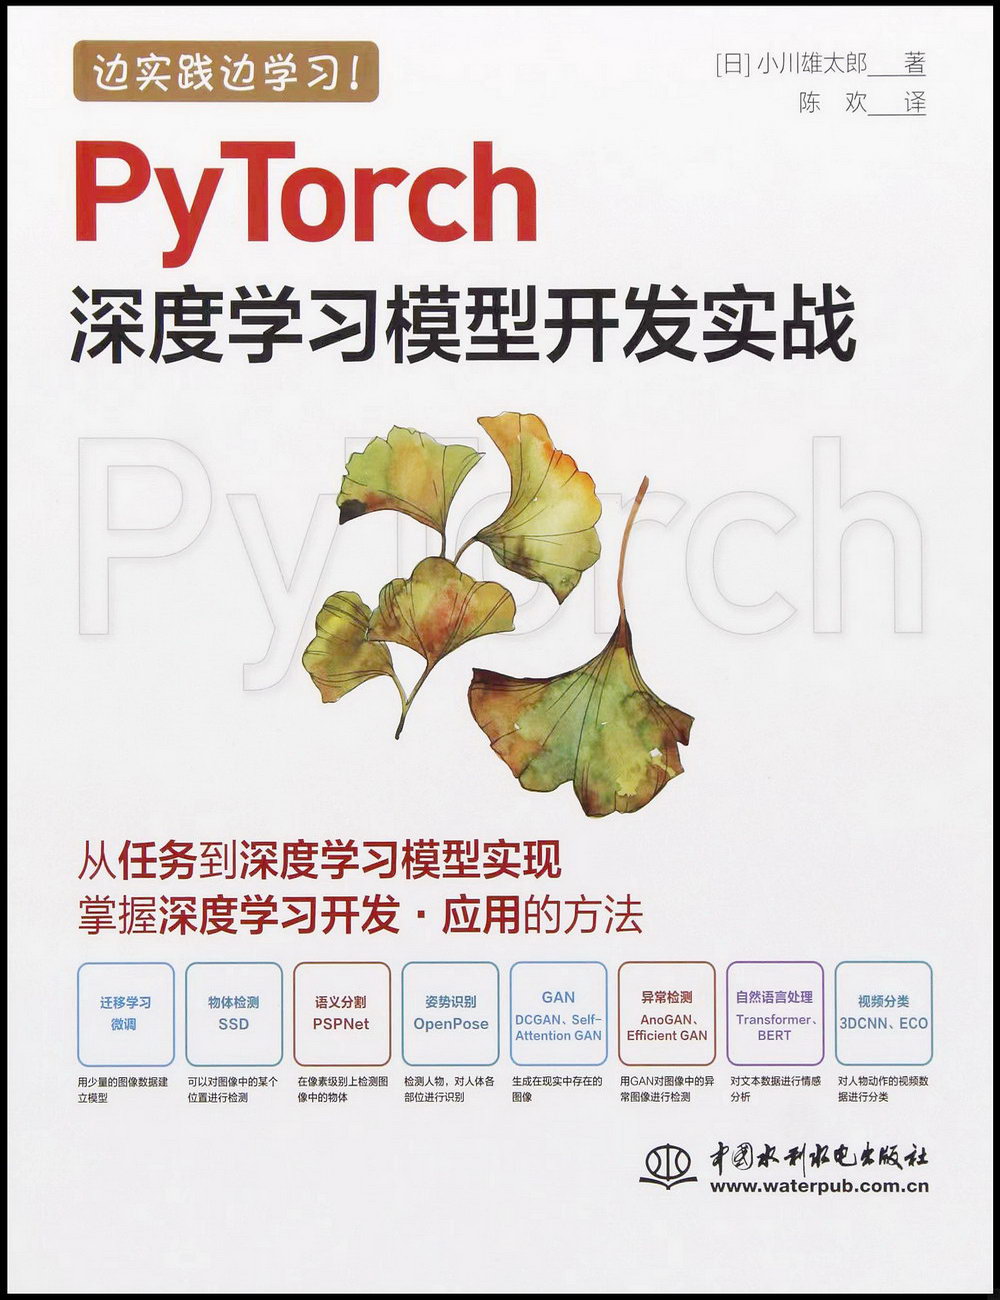 PyTorch 深度學習模型開發實戰